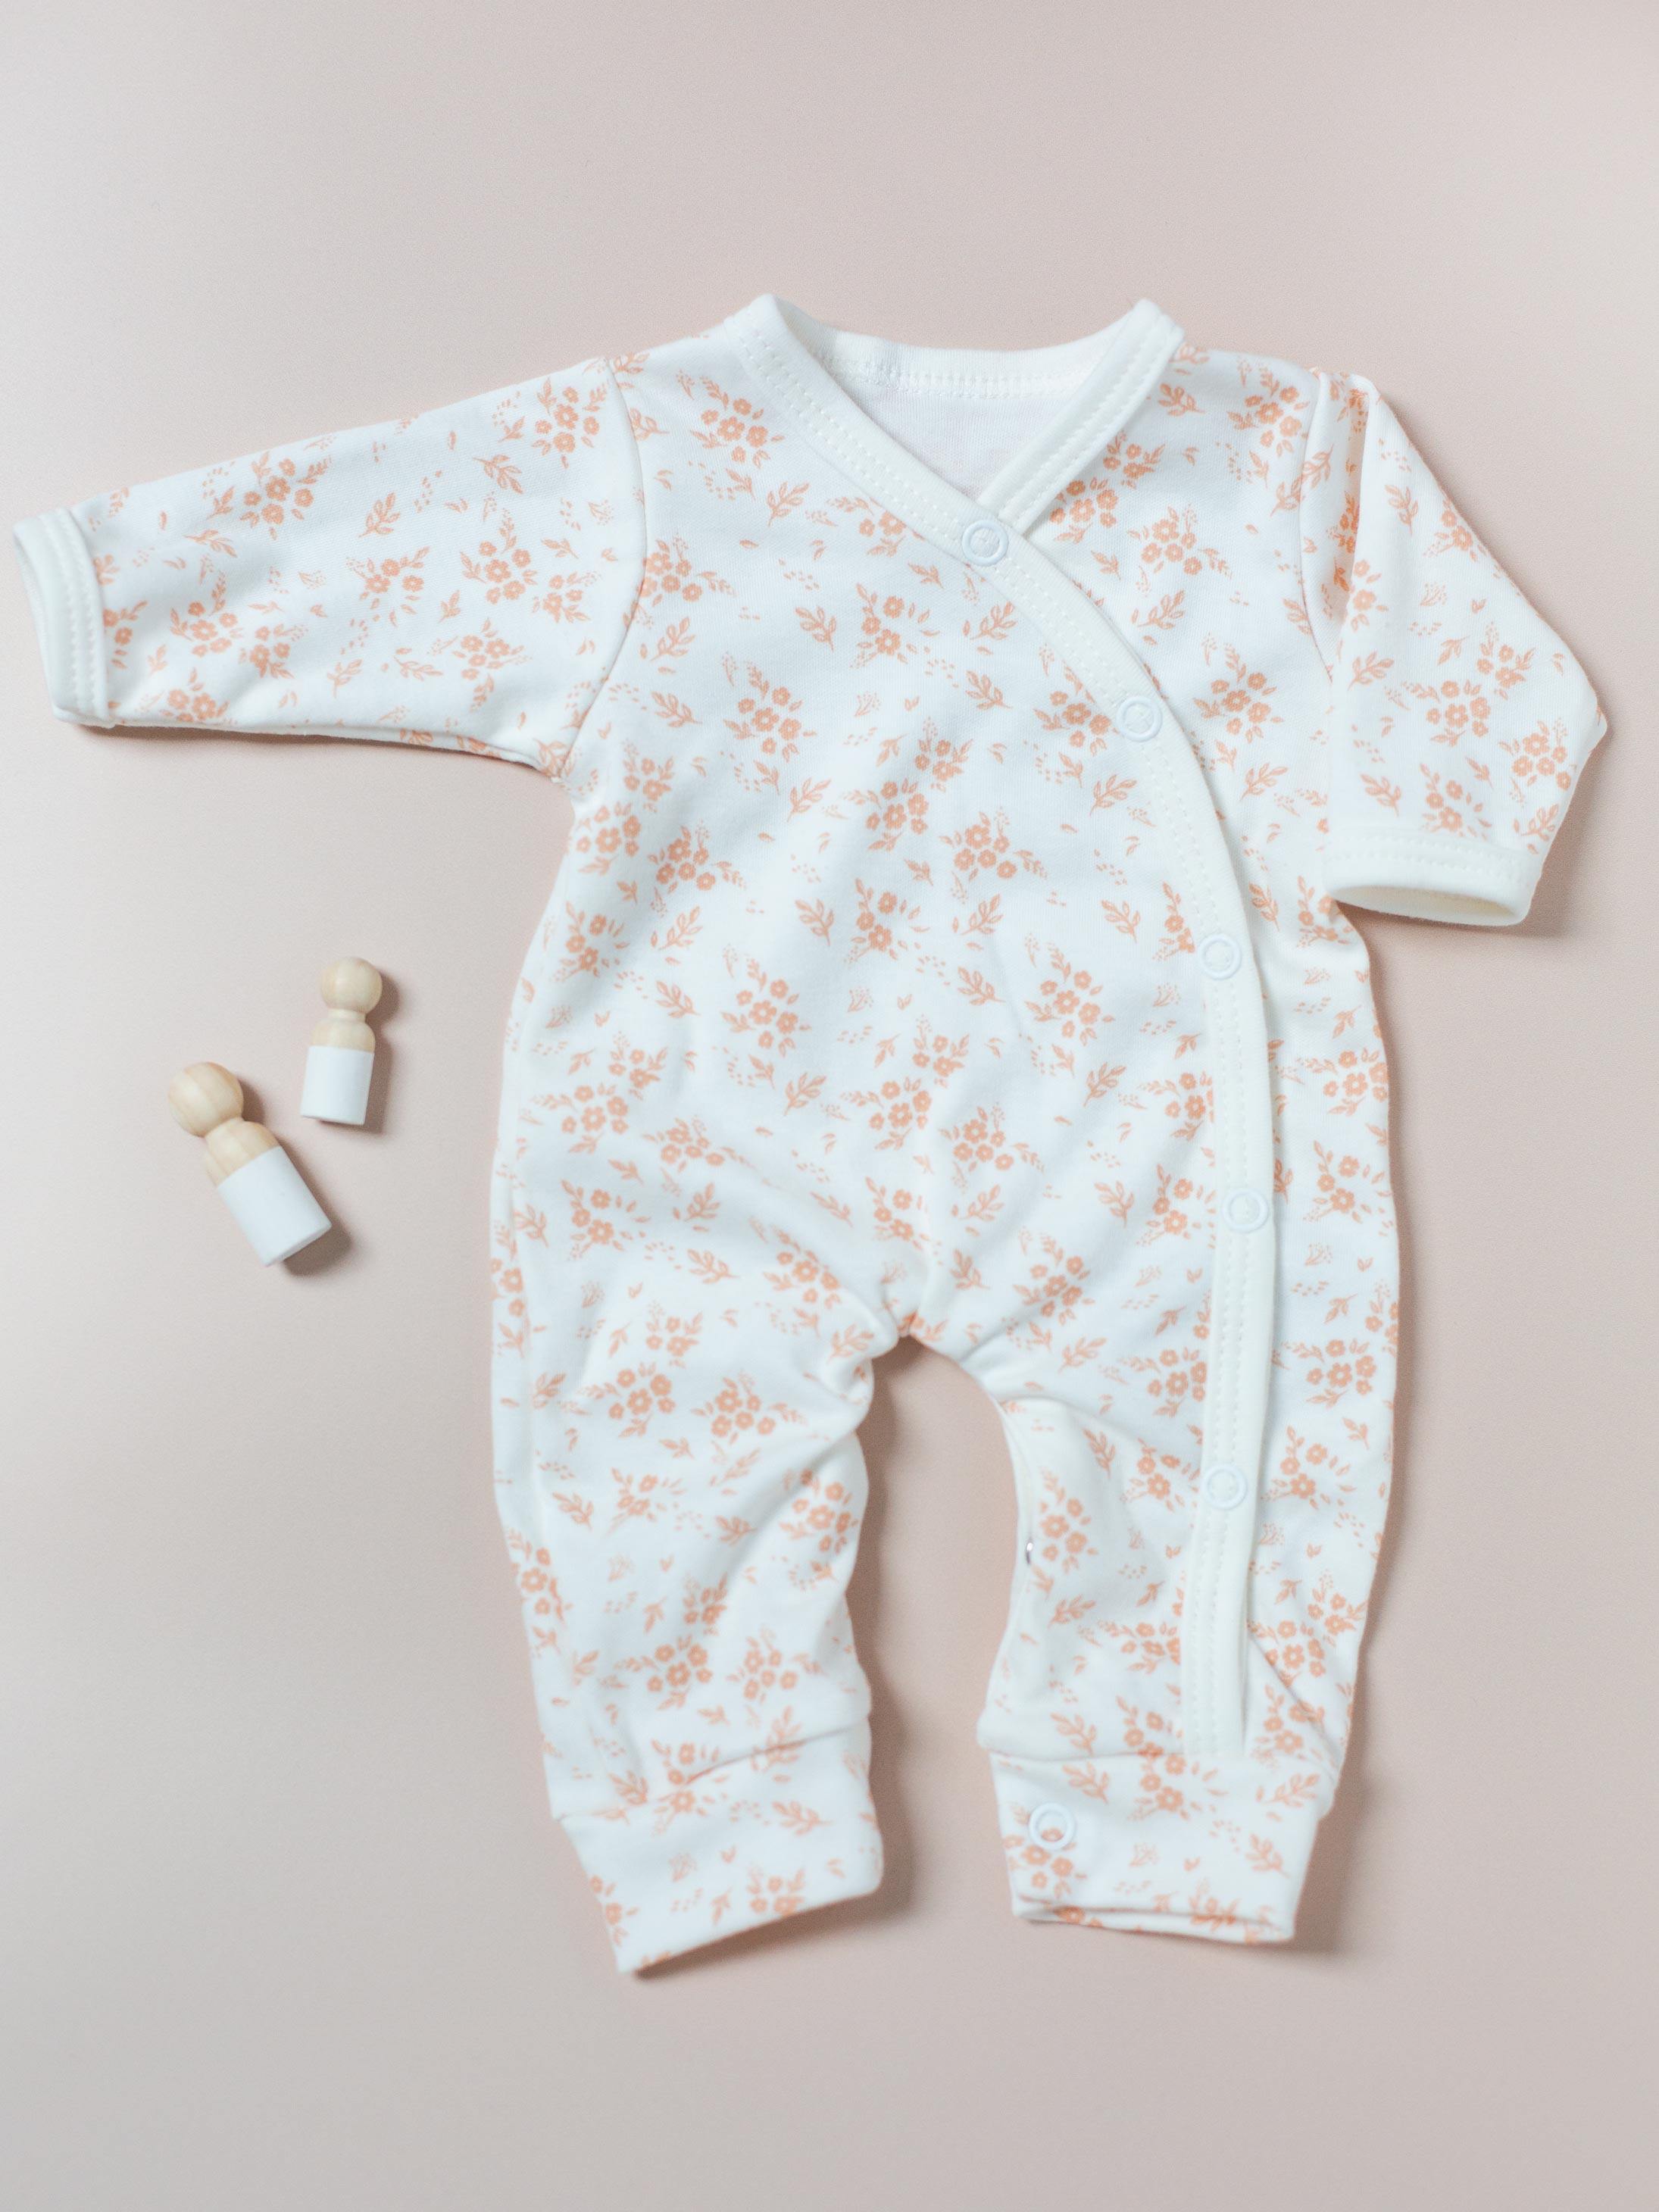 Sleepsuit, Apricot Floral, Premium 100% Organic Cotton - Sleepsuit / Babygrow - Tiny & Small